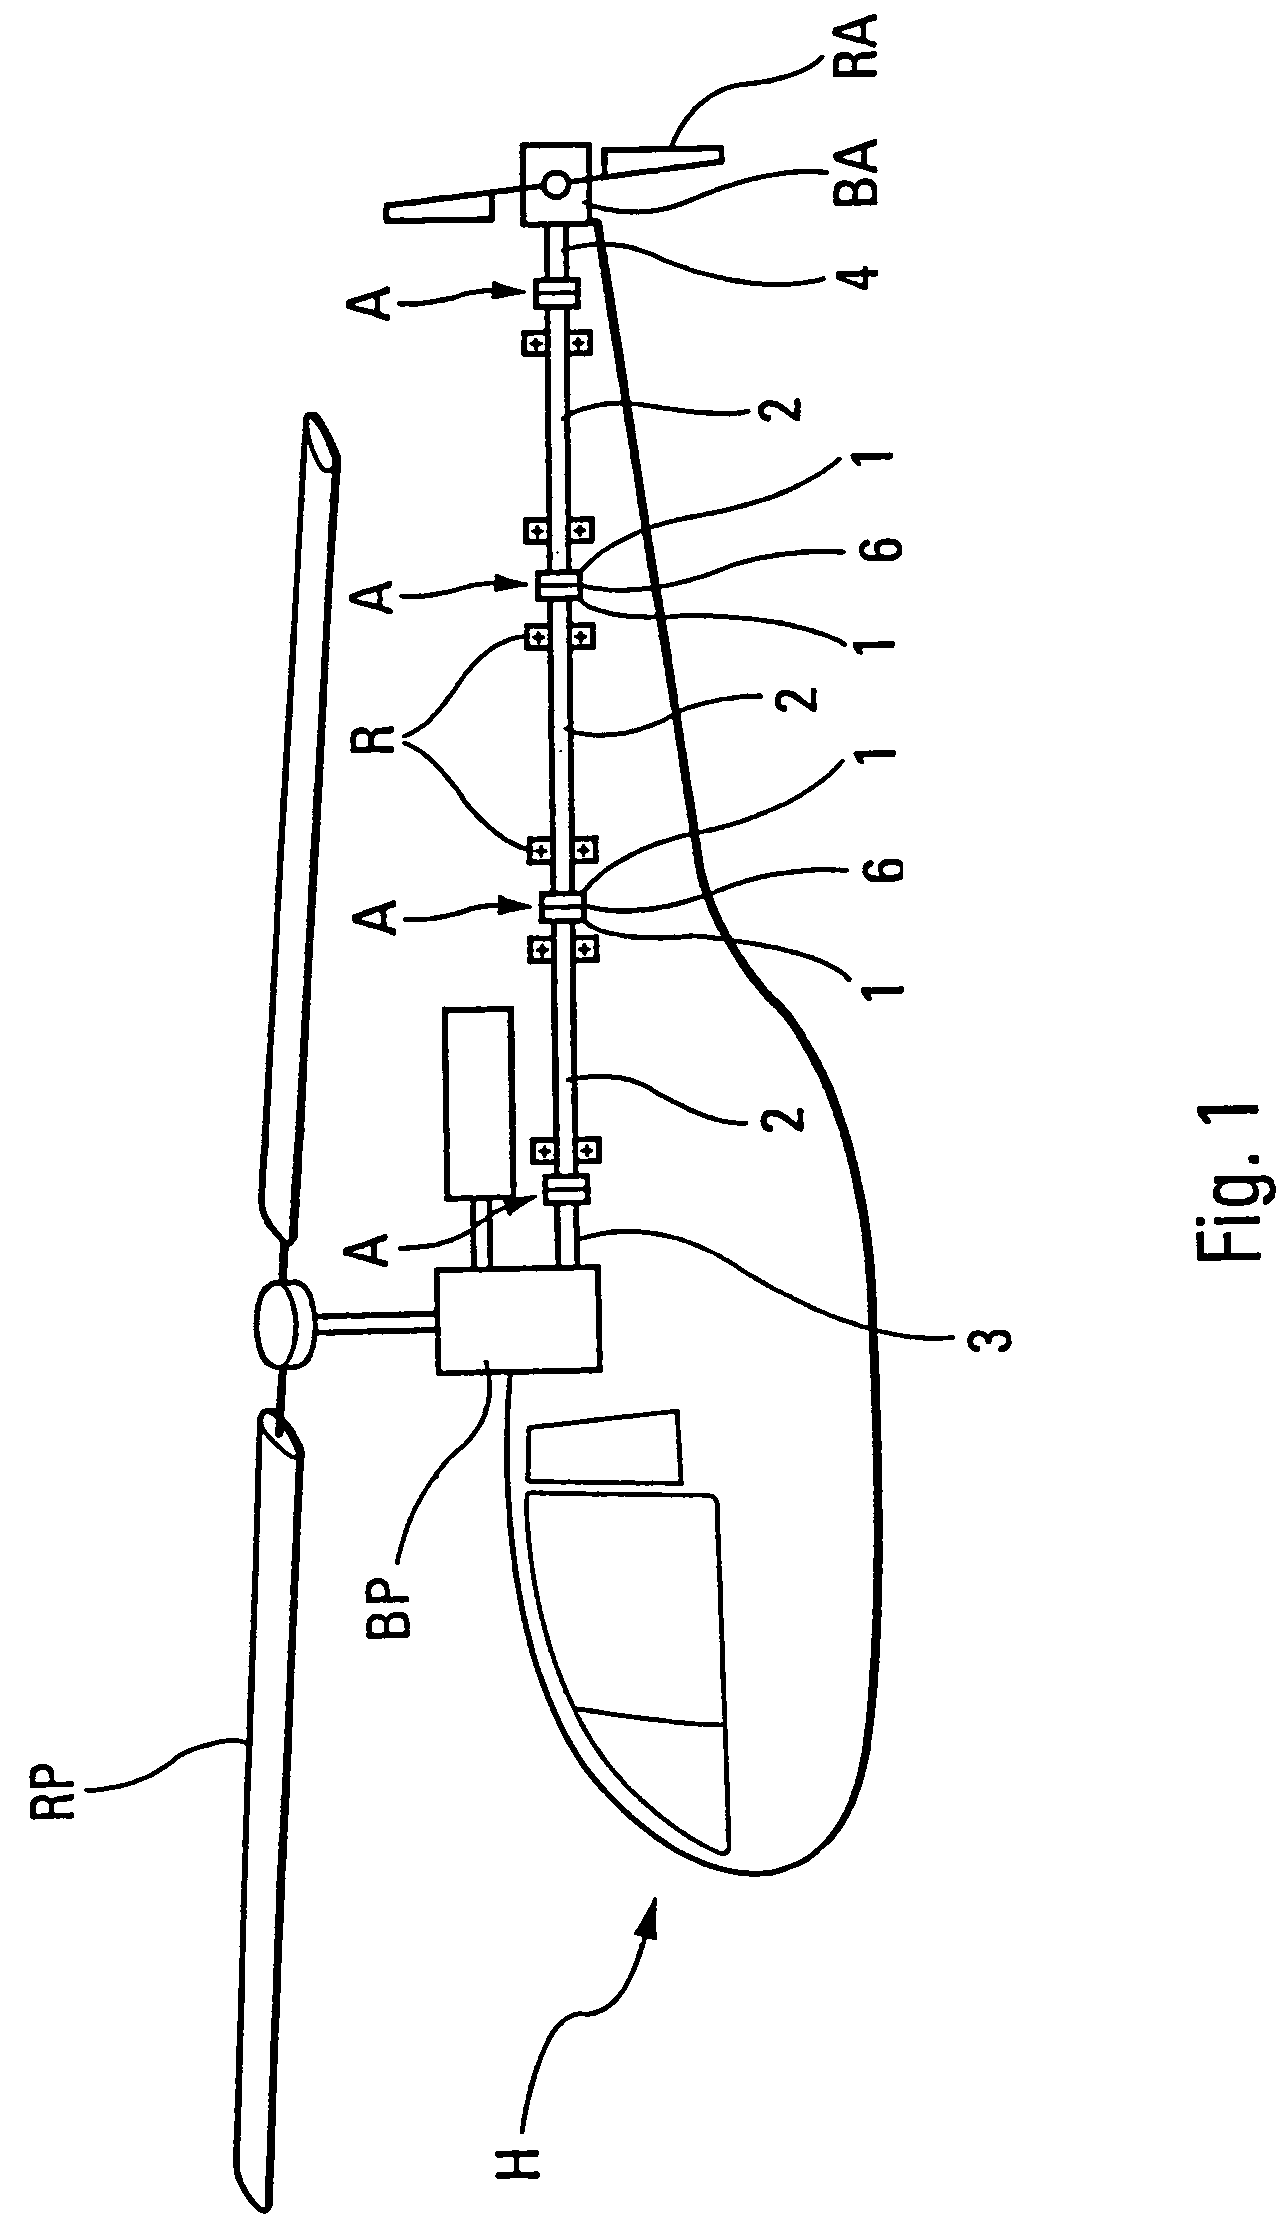 Coupling flange system for hollow shaft